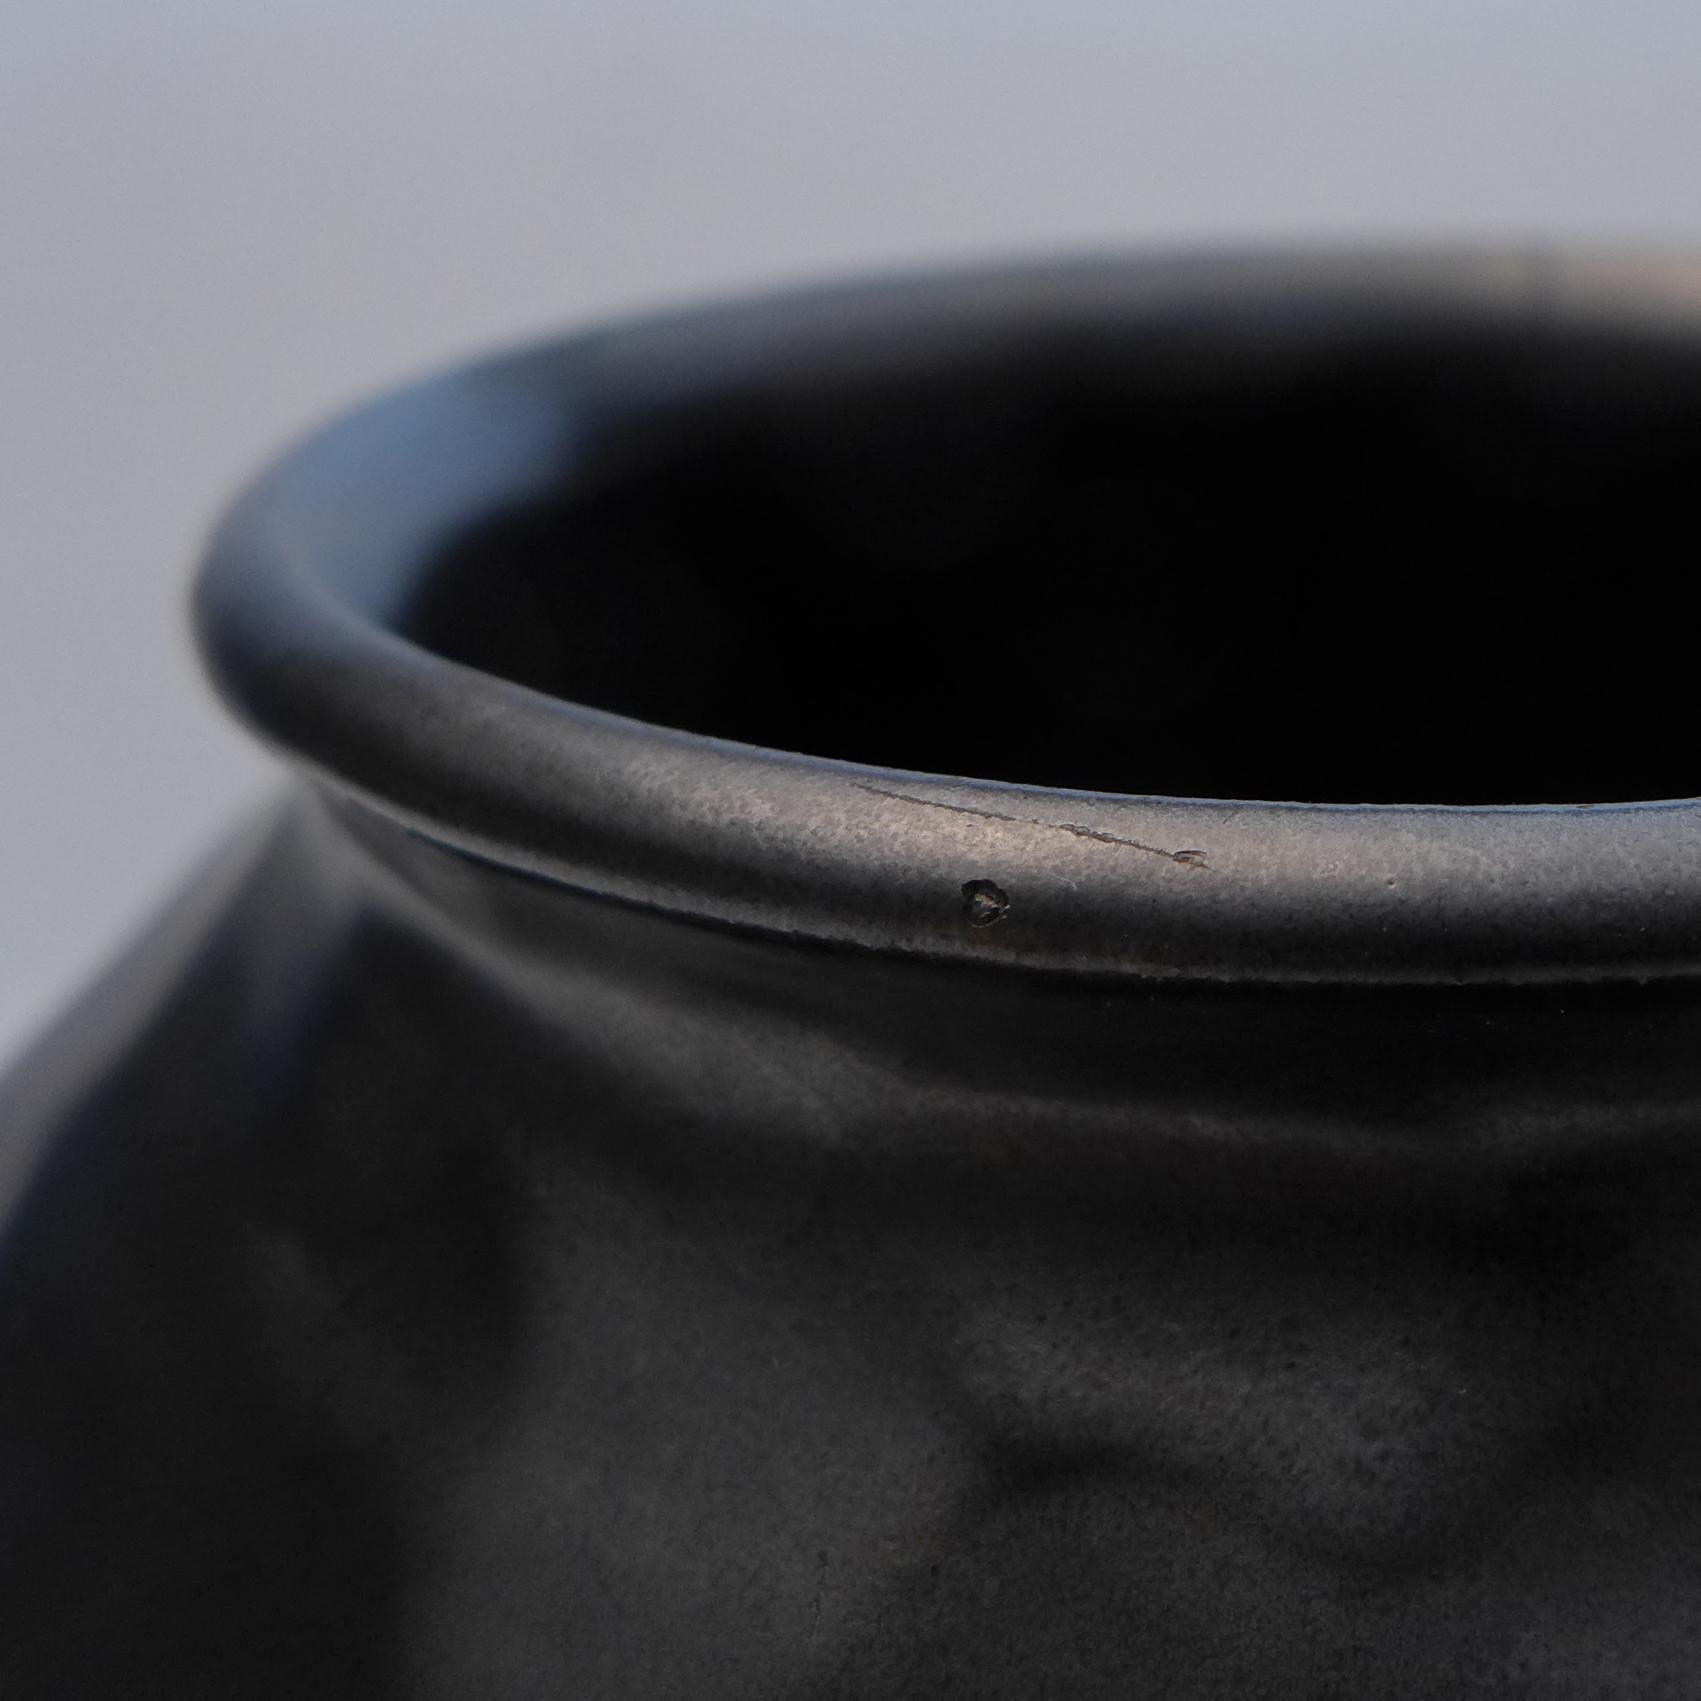 black art deco vase